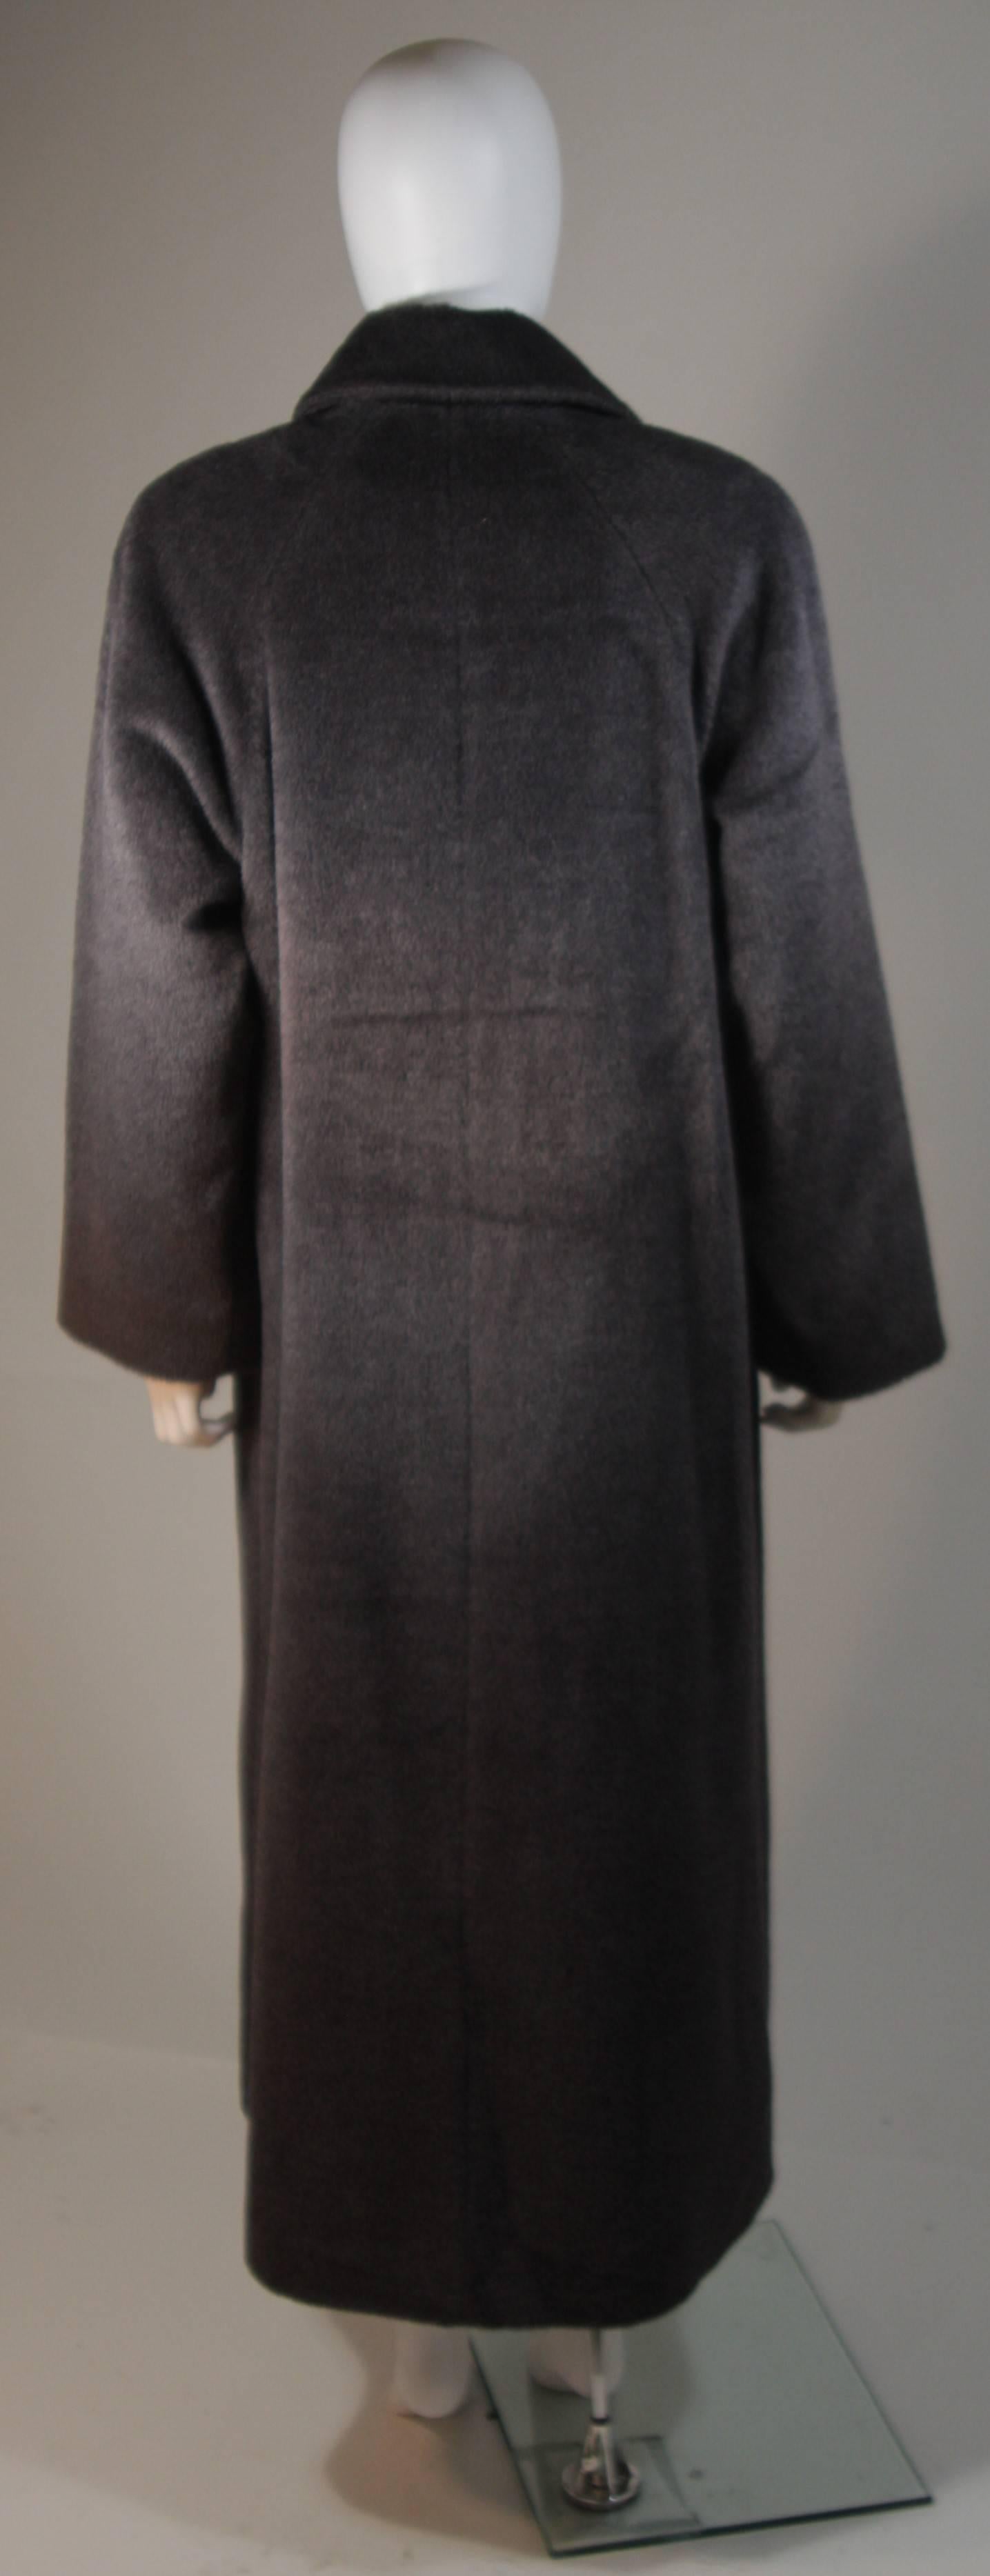 MALLIA PIACENZA Grey Baby Llama Coat with Fox Fur Tassels Size 8 at ...